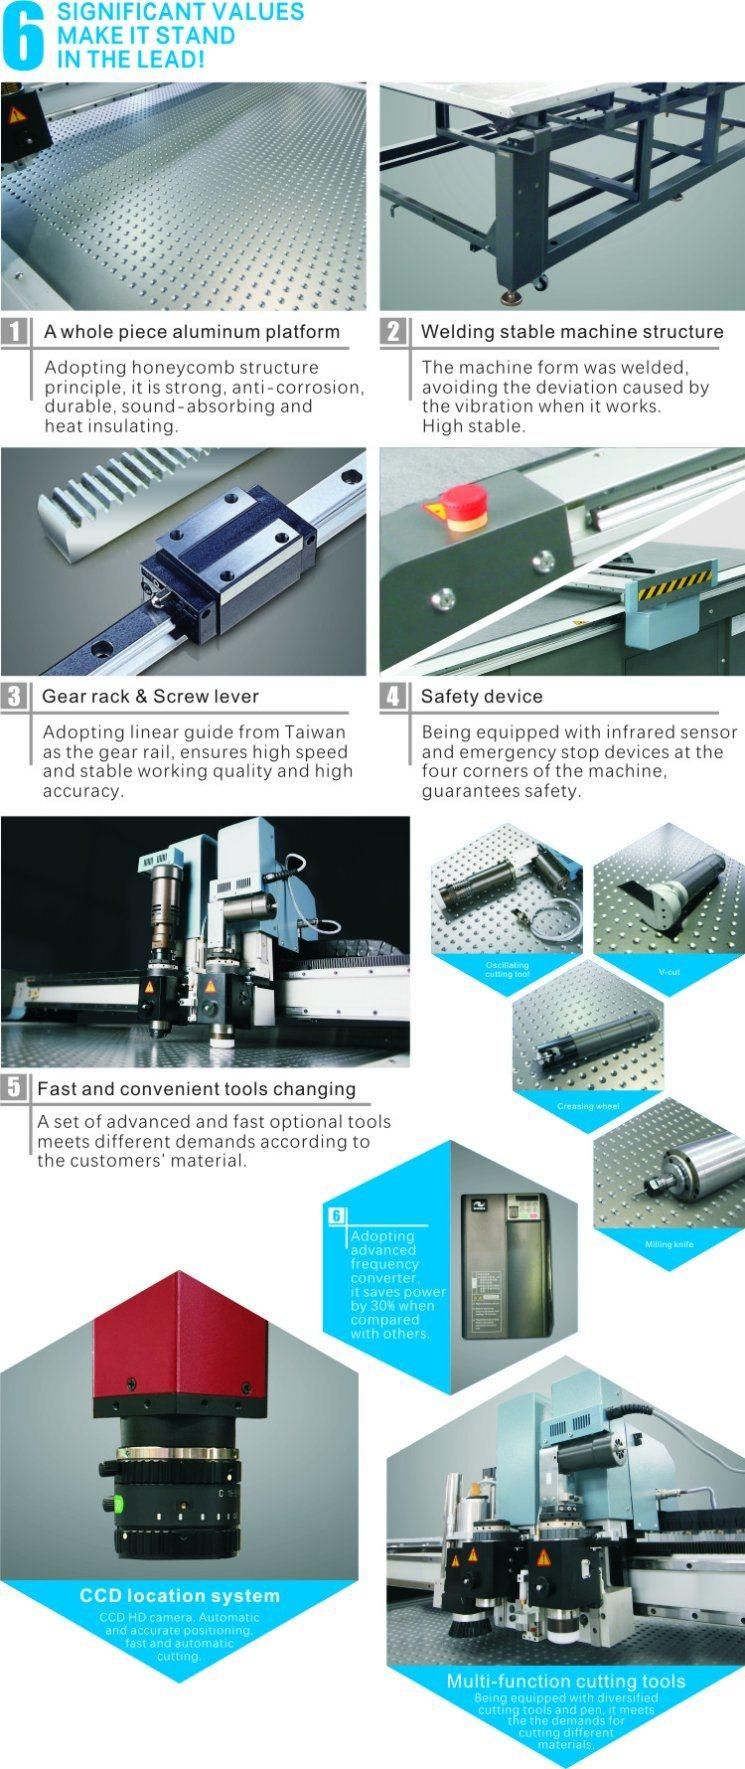 CNC Full Automatic 12000X1600mm Gloth Cutting Machine Cutting Plotter